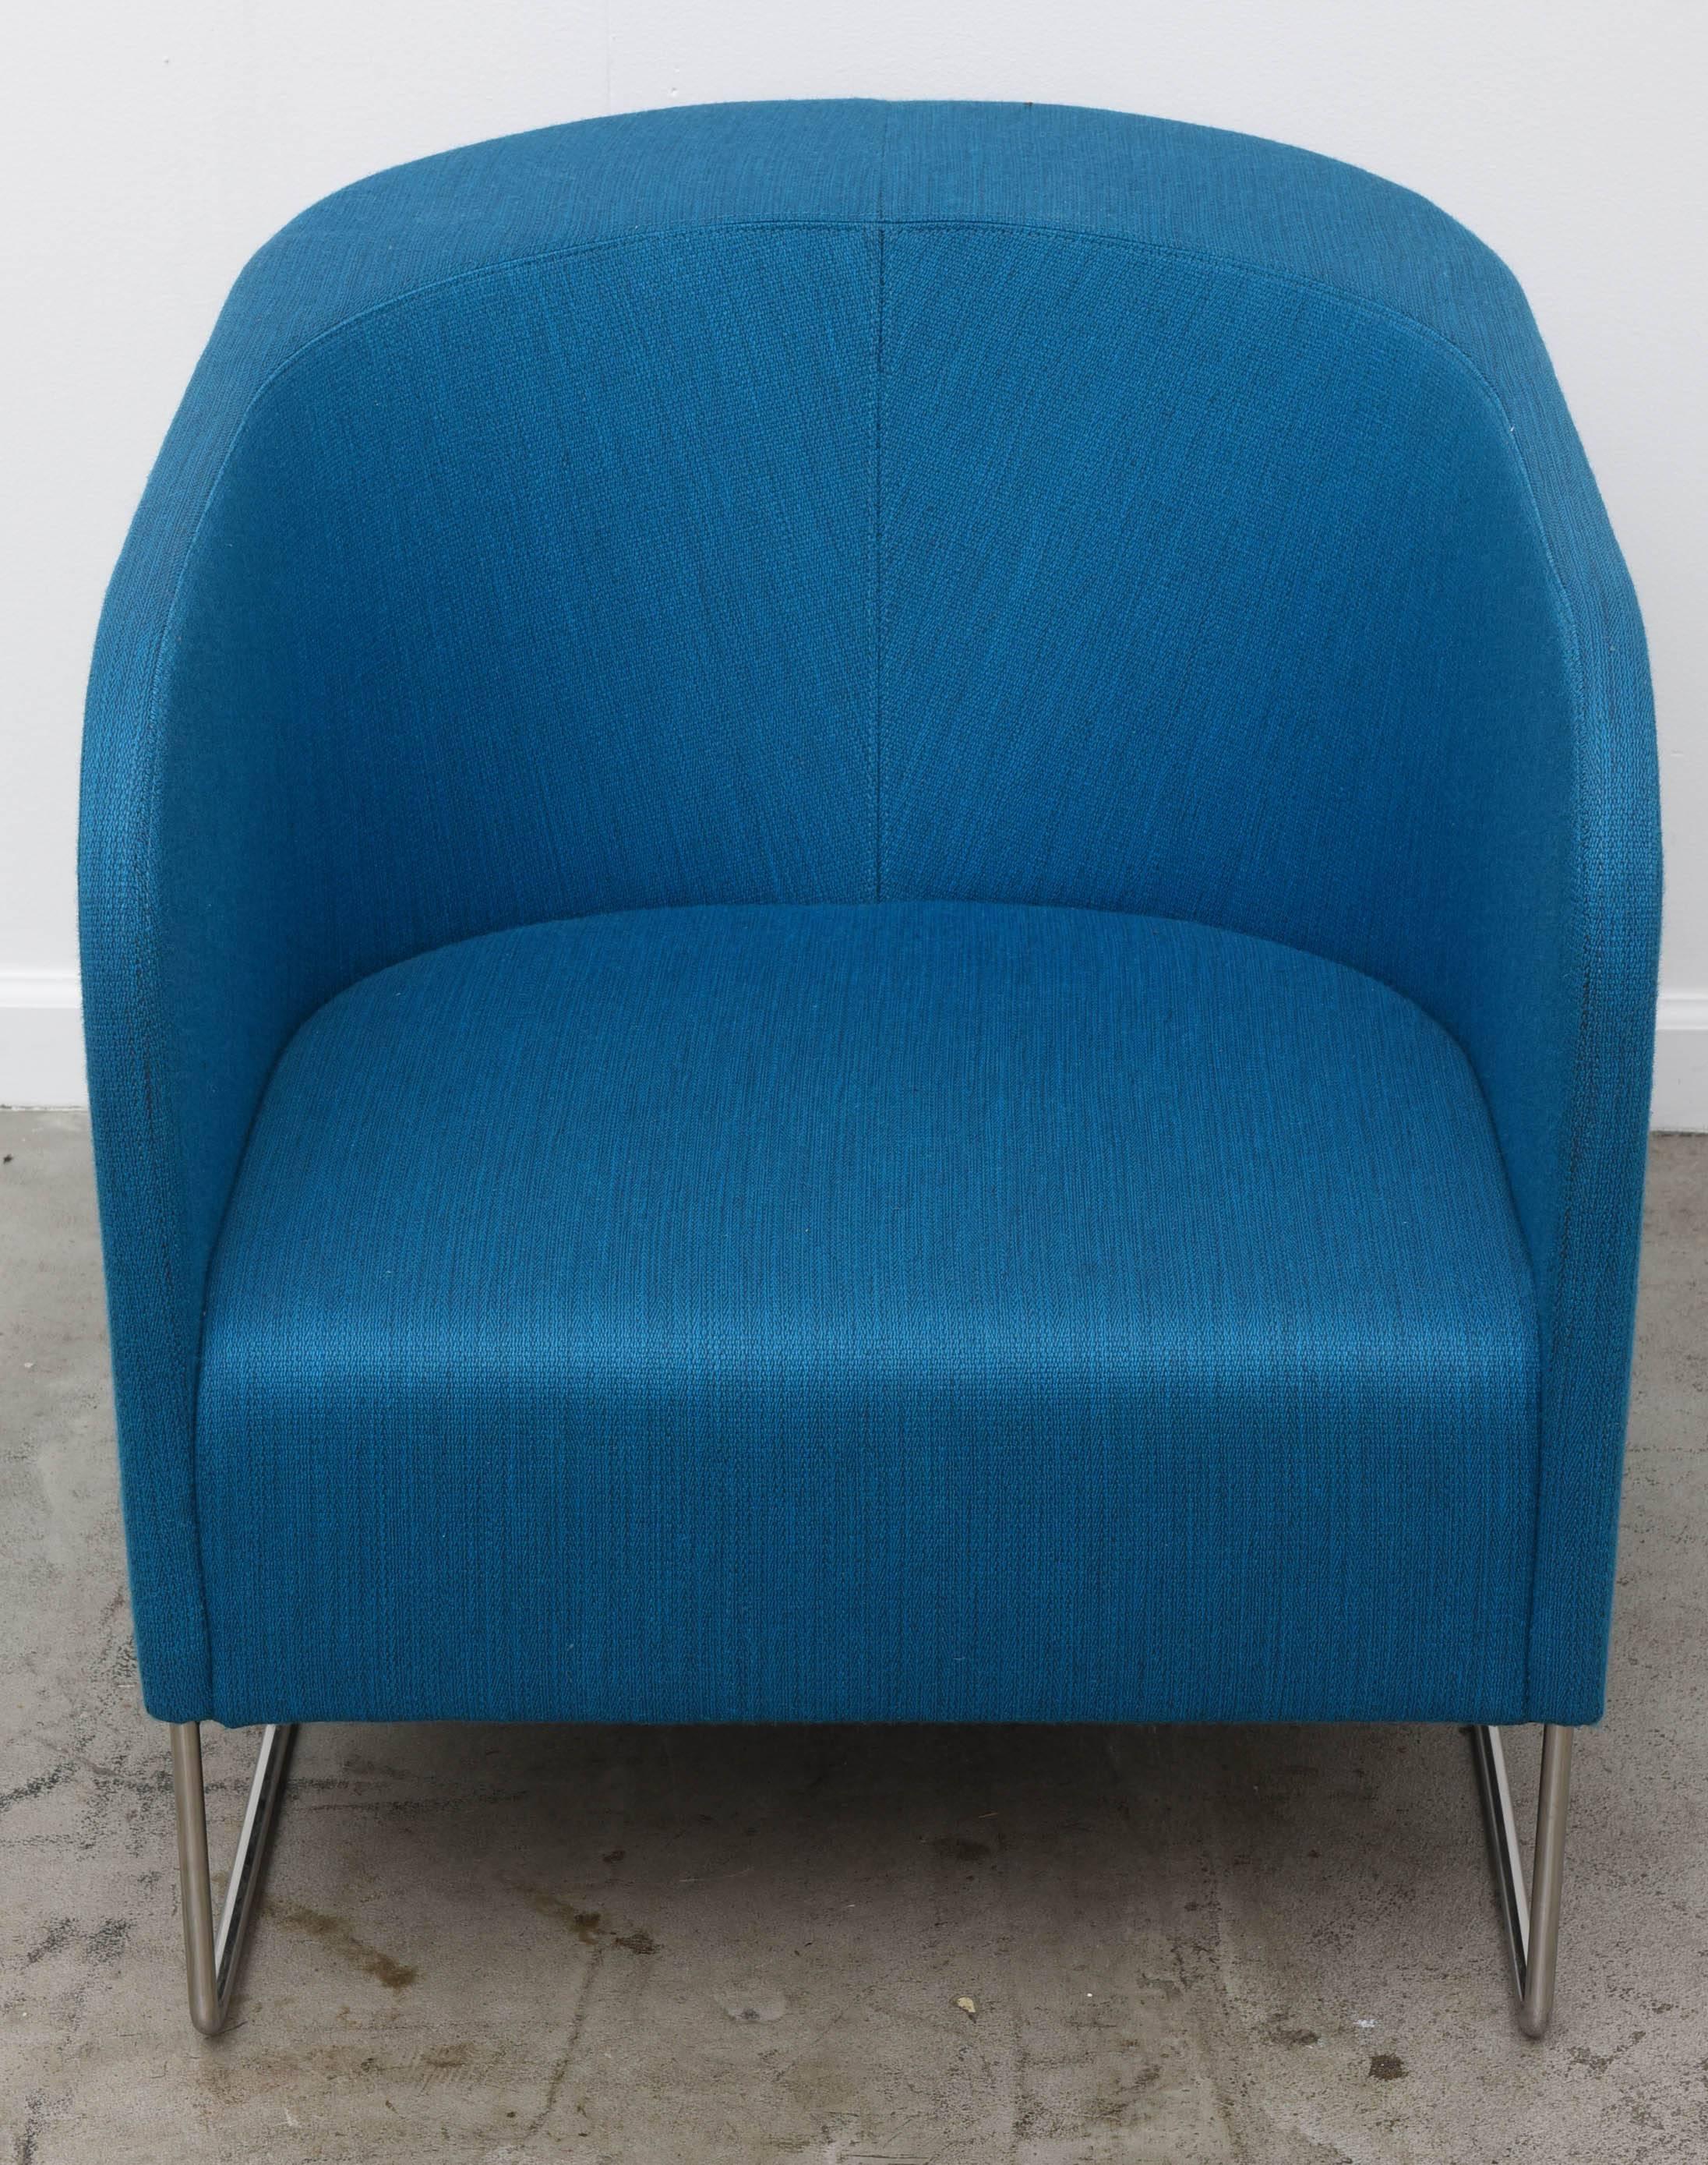 Danish Lounge Chair by Kasper Salto, in the model called 